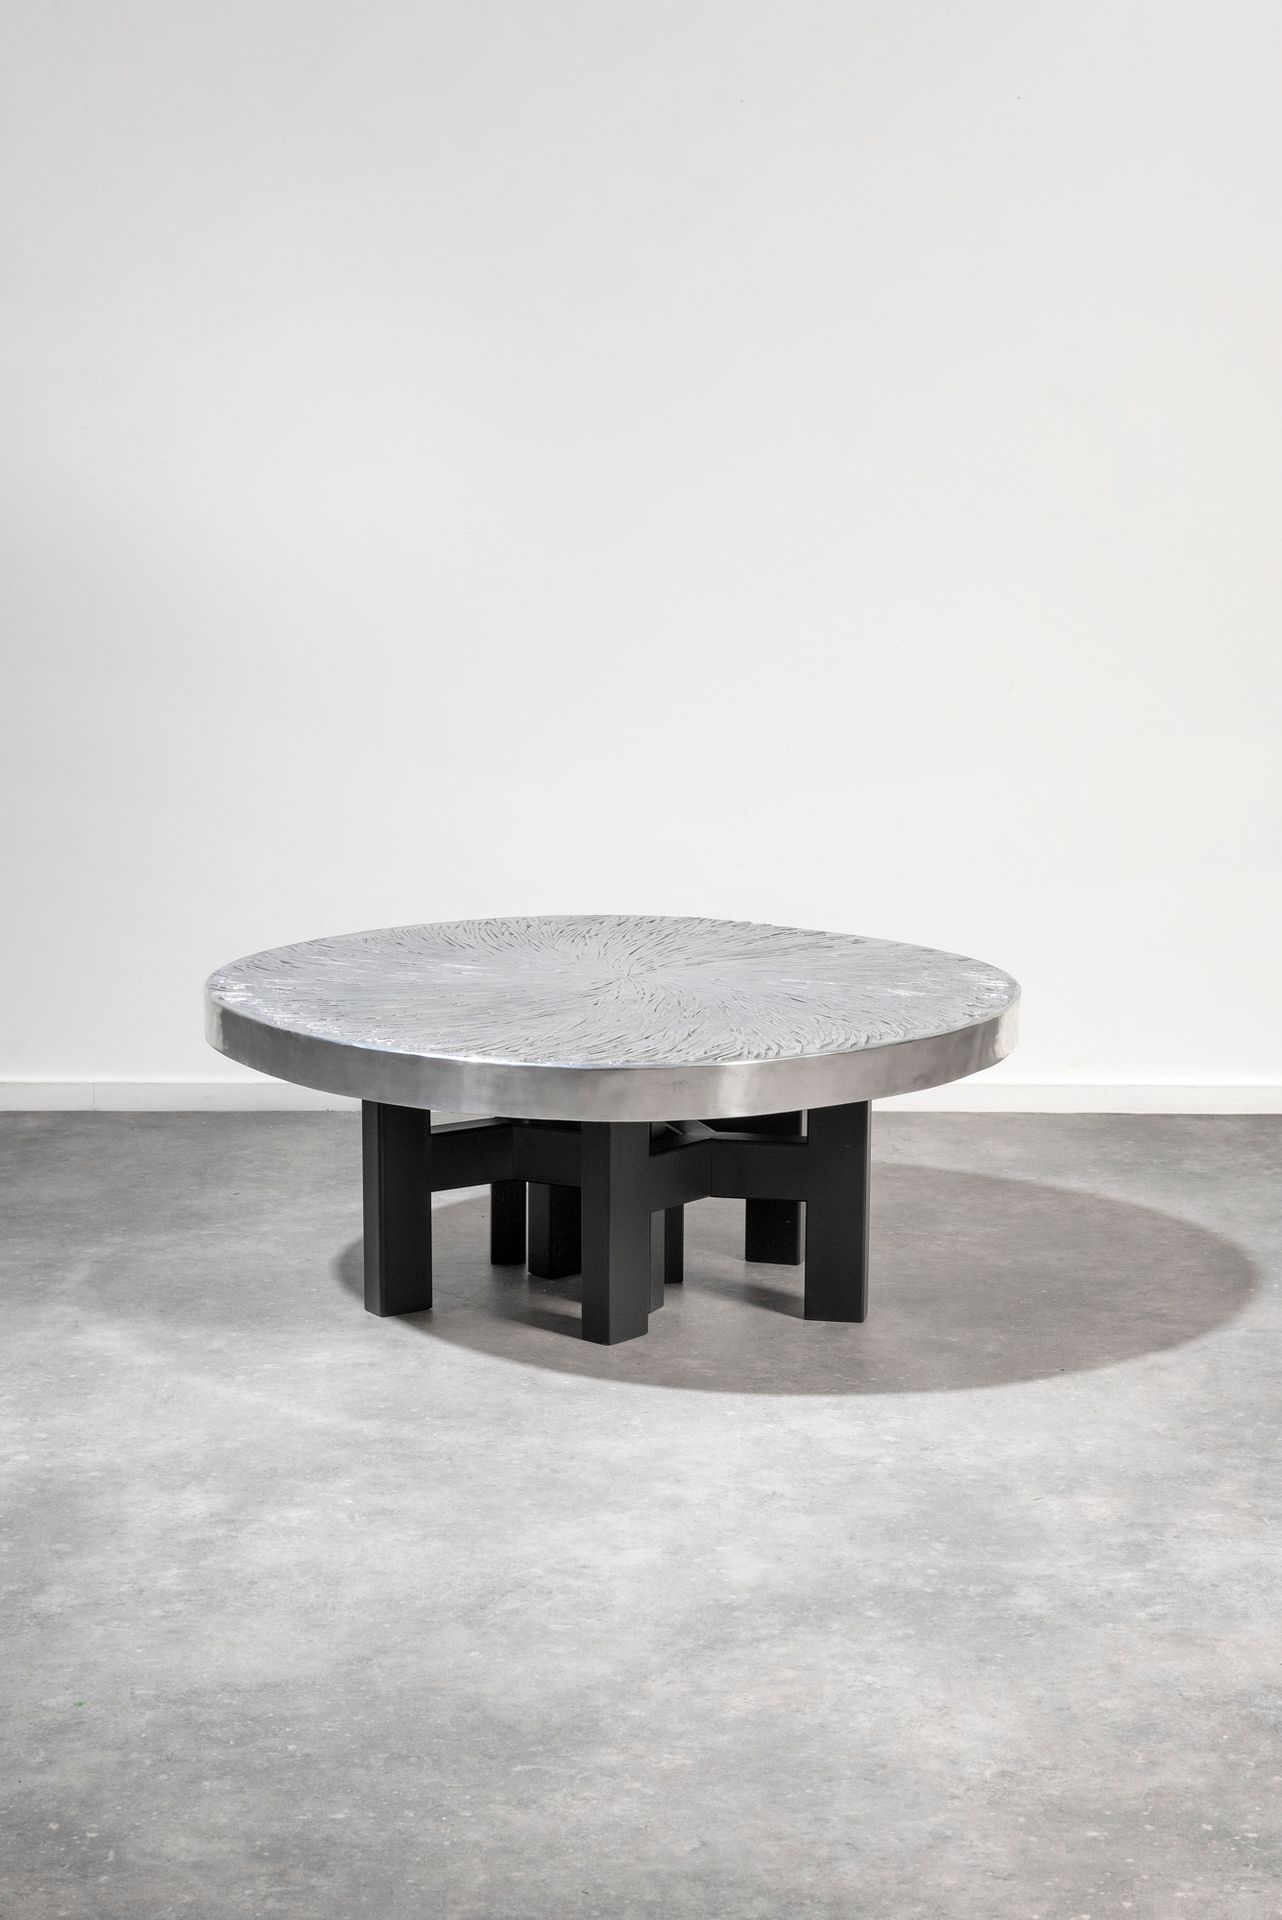 Ado CHALE (né en 1928) Copeaux
Coffee table
Tray in cast aluminum resting on thr&hellip;